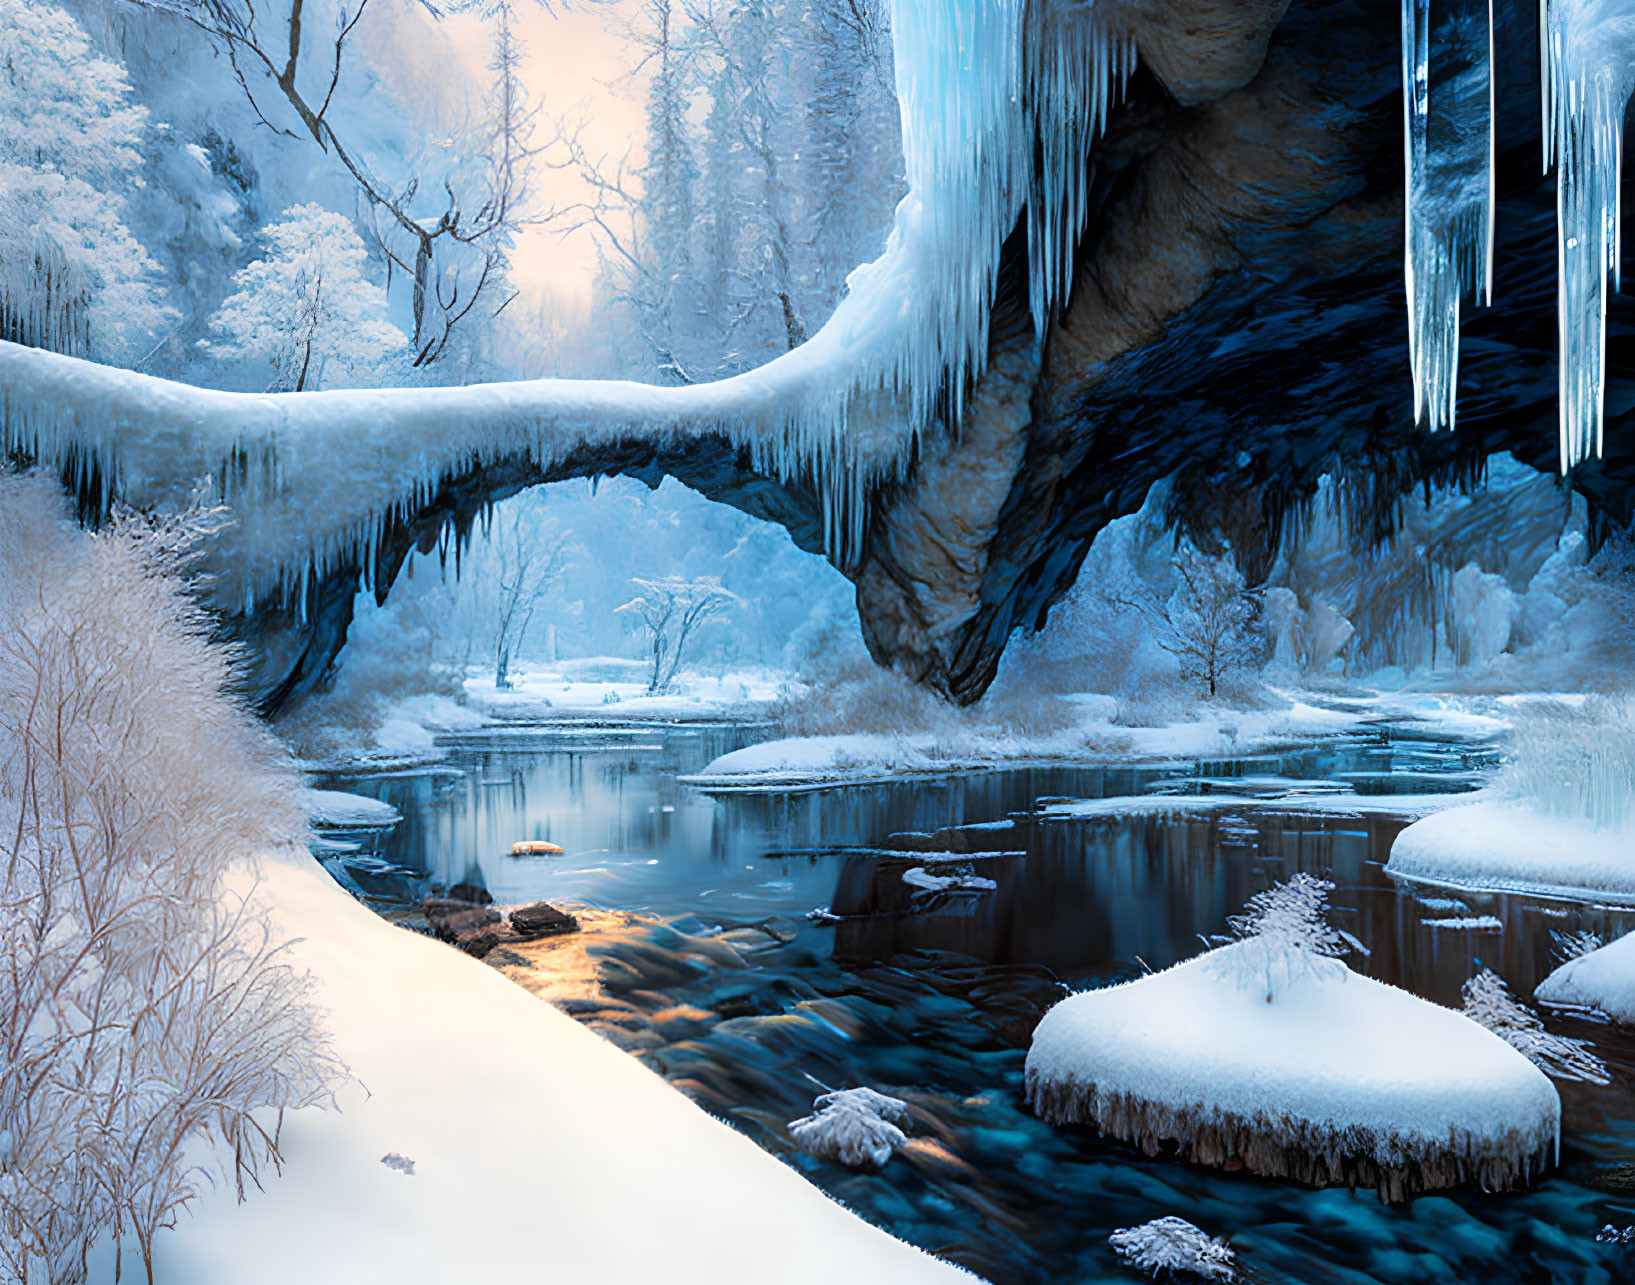 Snow-covered natural bridge over frozen river in serene winter scene